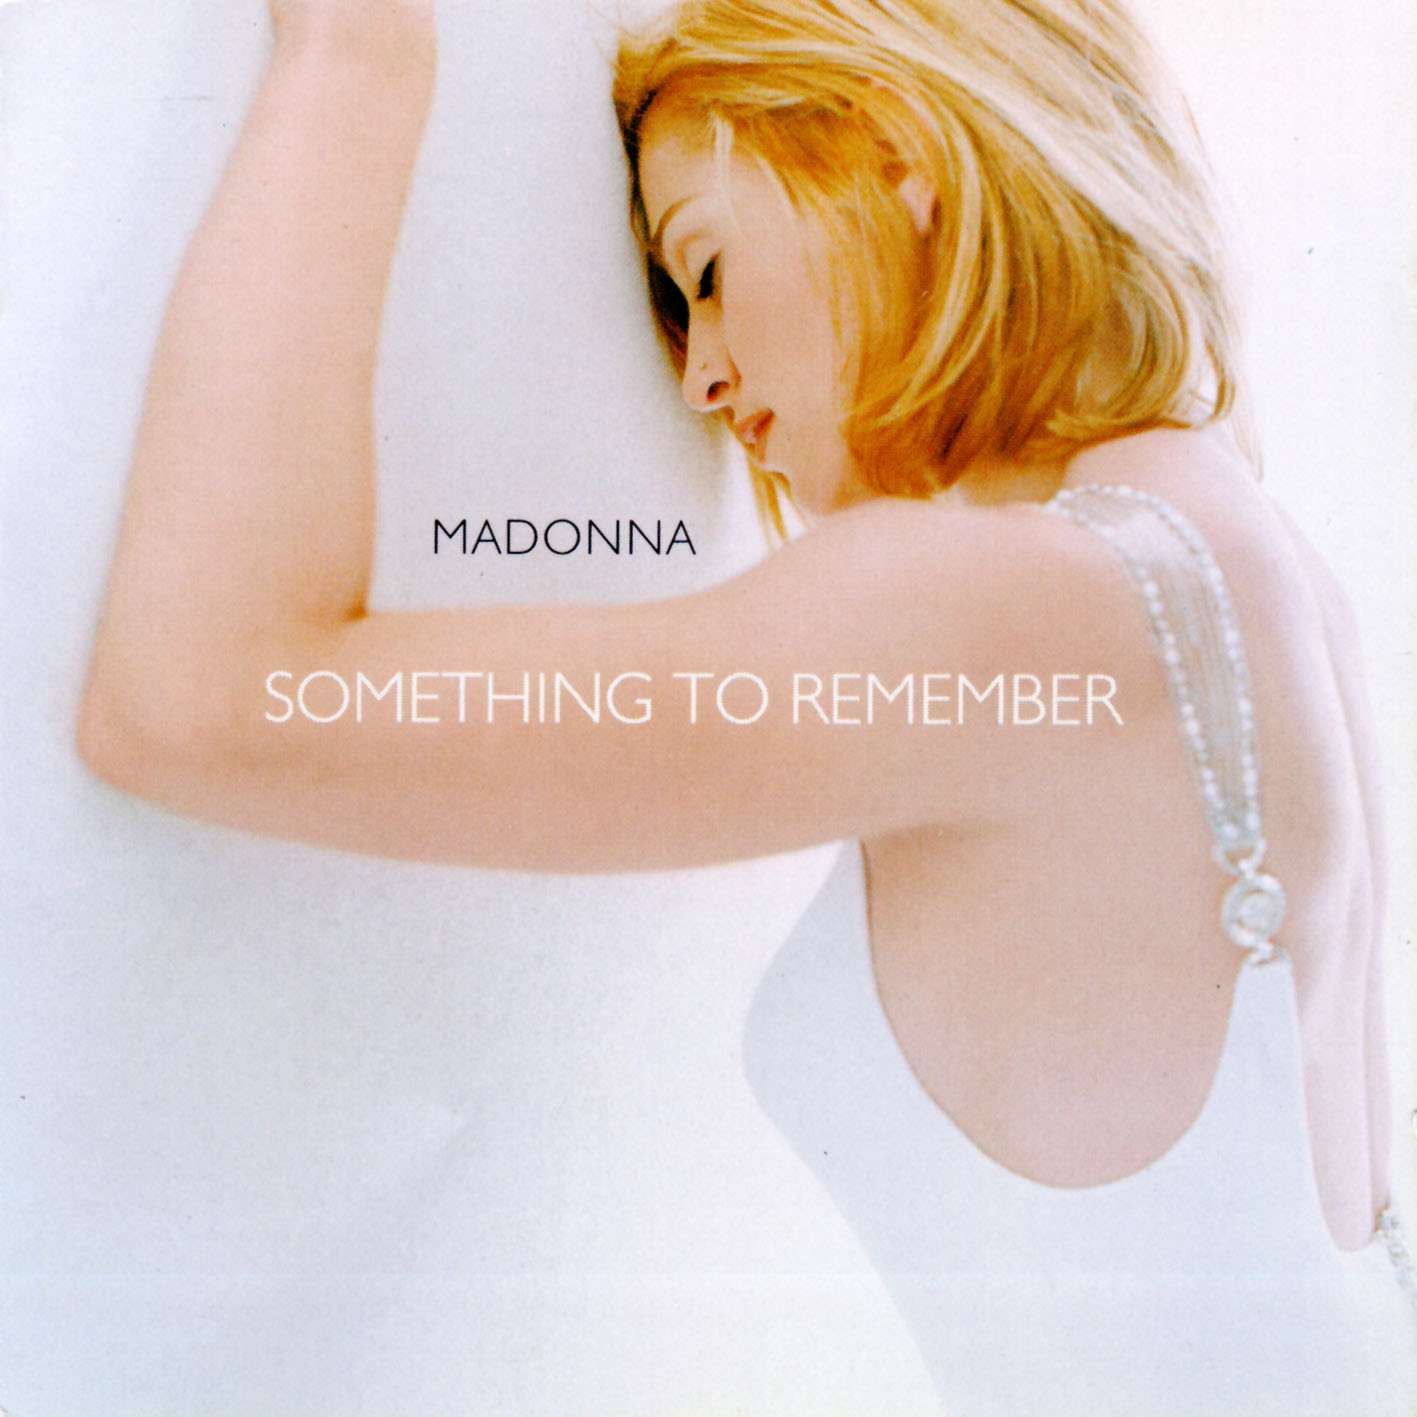 http://4.bp.blogspot.com/_f2iAGRf_Ioo/TIarTkfZ_hI/AAAAAAAABUs/KzZbCzF-sdQ/s1600/Madonna-Something-To-Remember-Delantera.jpg